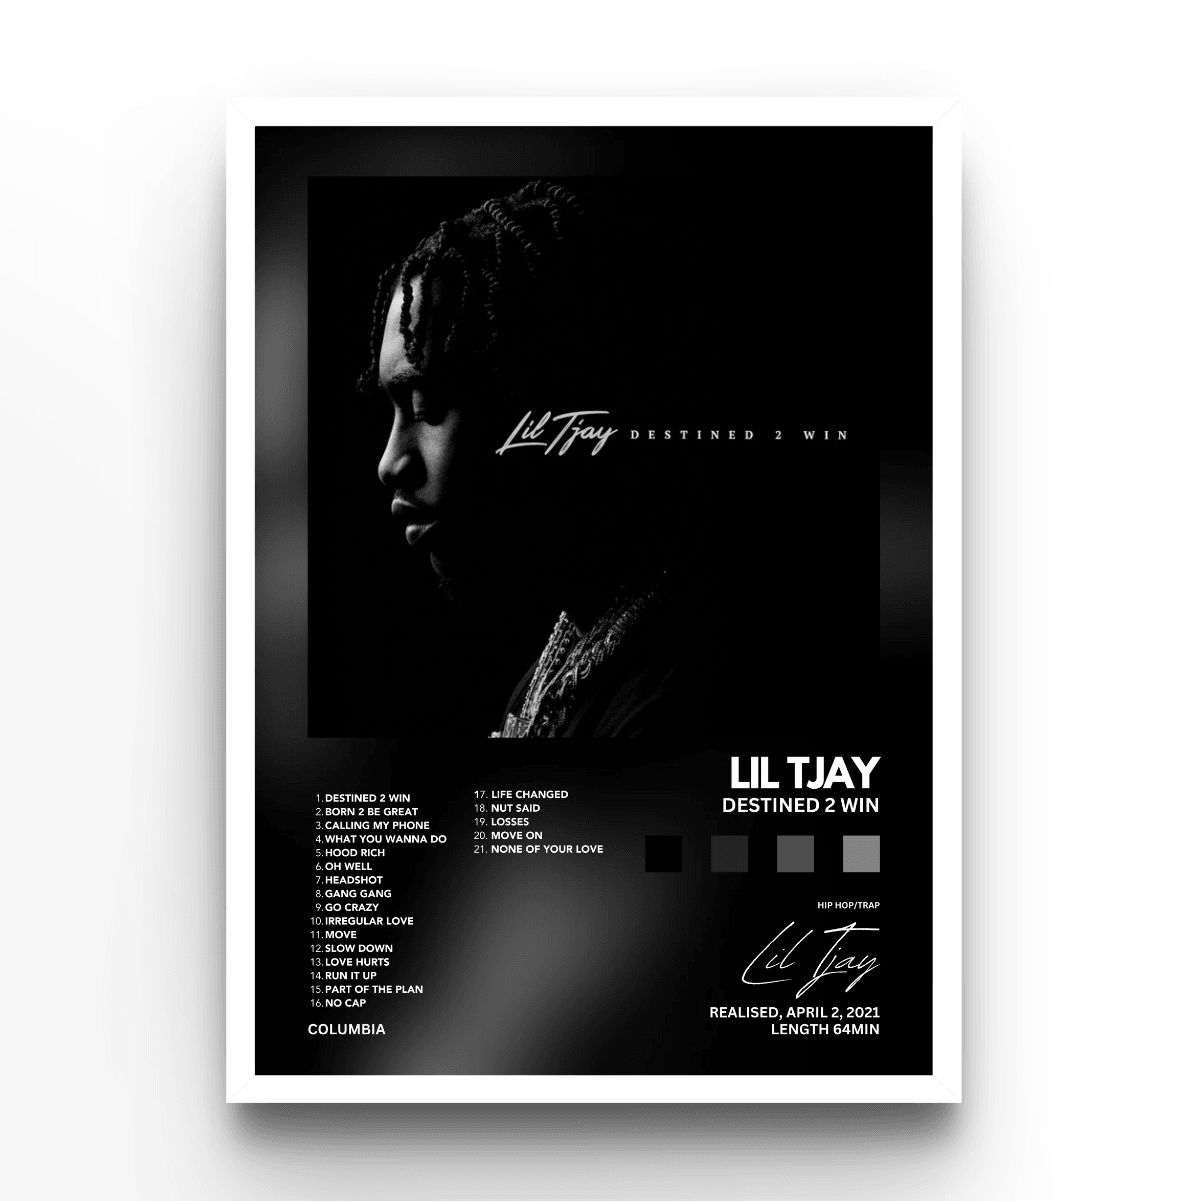 Lil Tjay Destined 2 Win Album - A4, A3, A2 Posters Base - Poster Print Shop / Art Prints / PostersBase